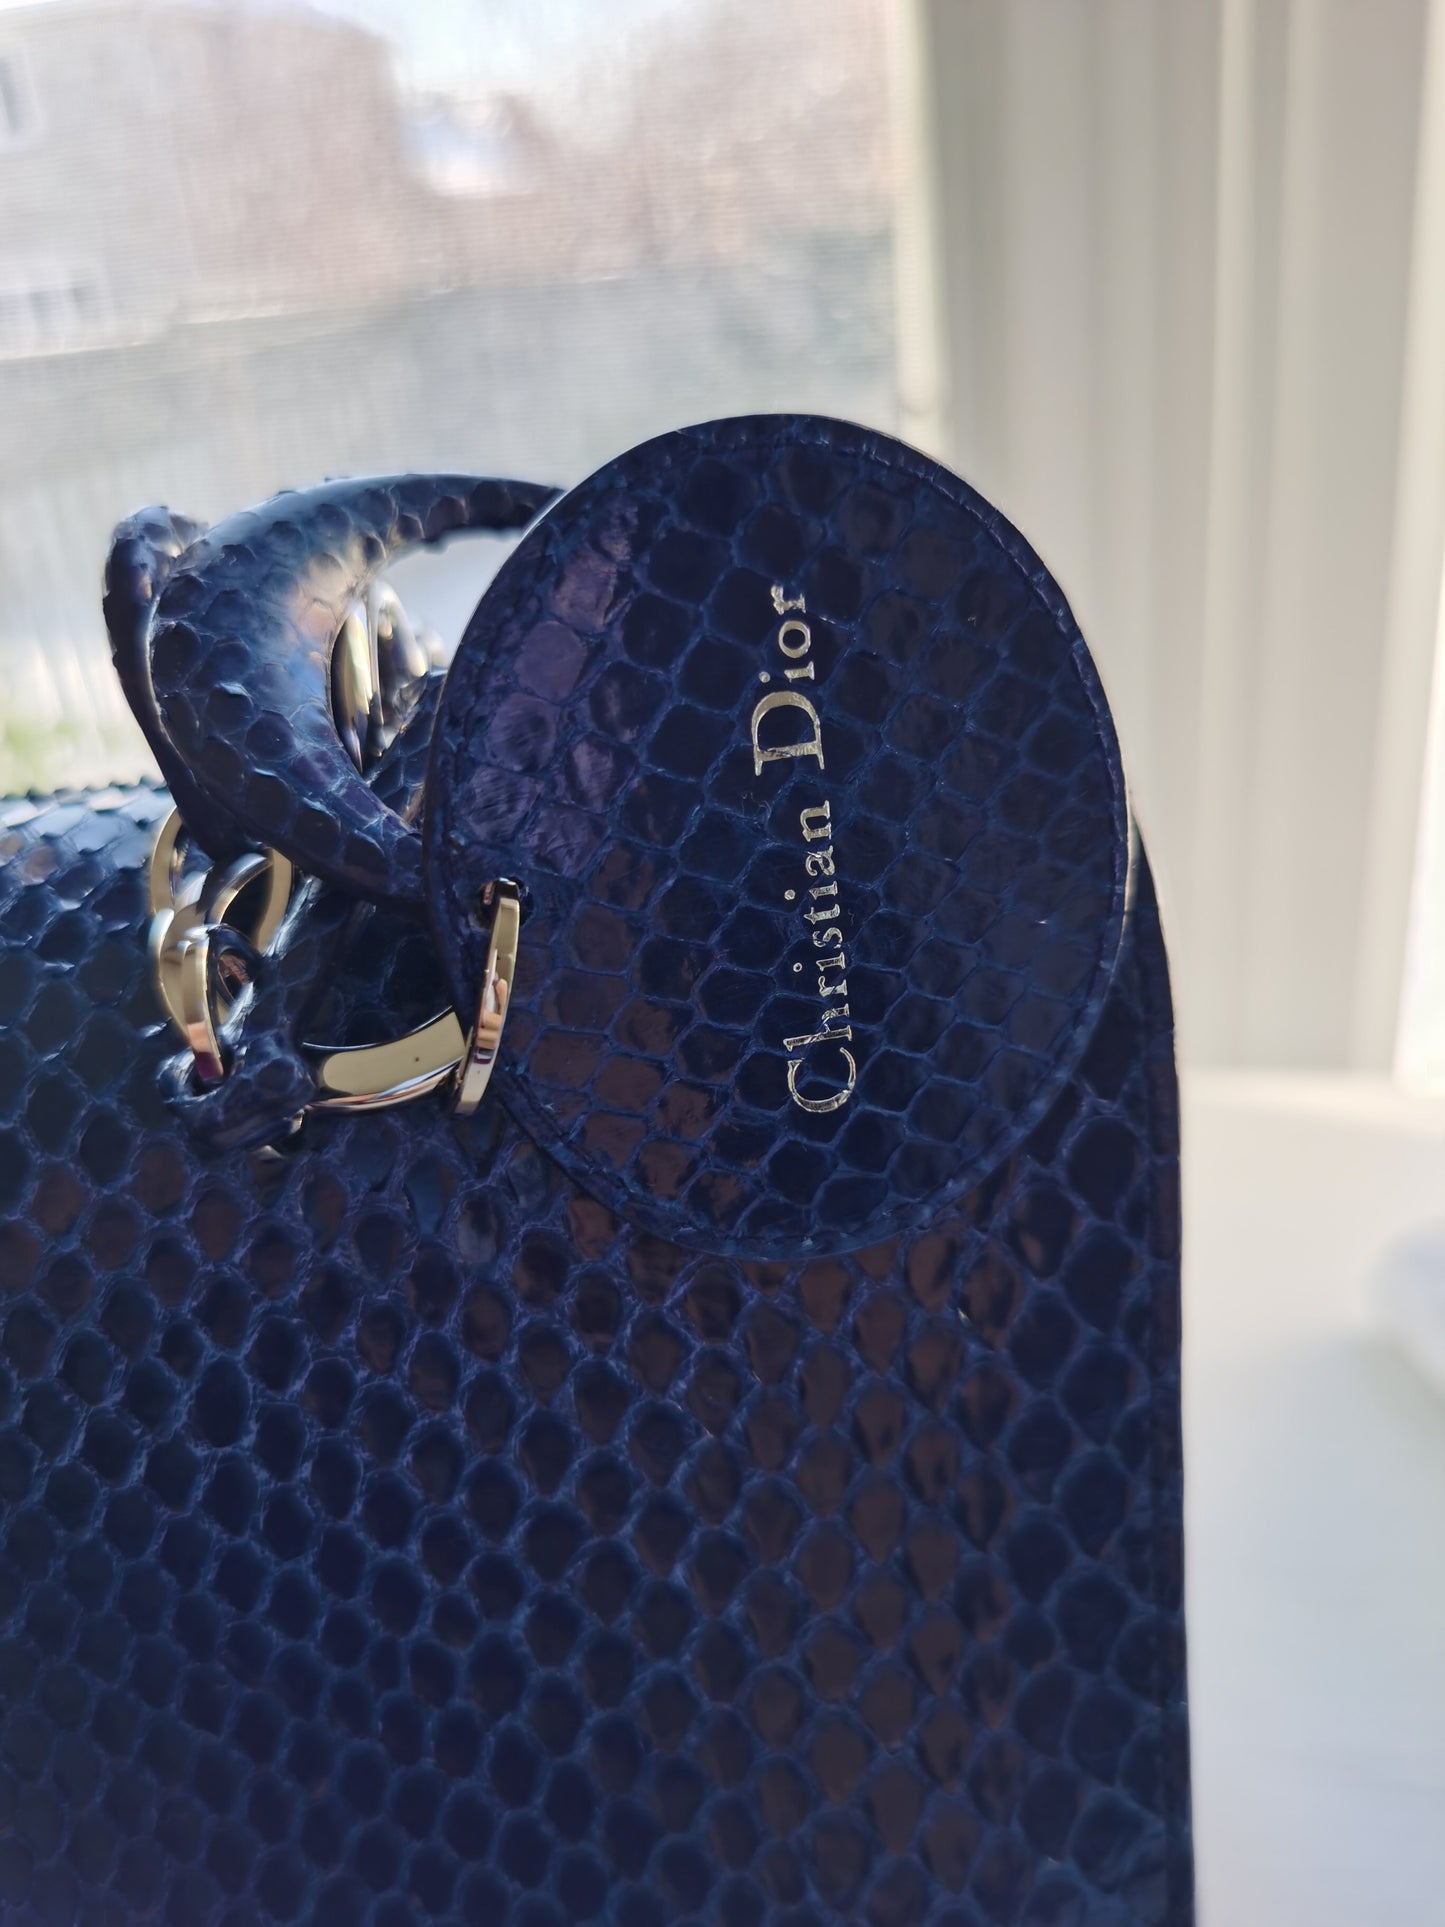 Christian Dior Be Dior flap bag in metallic Blue python.